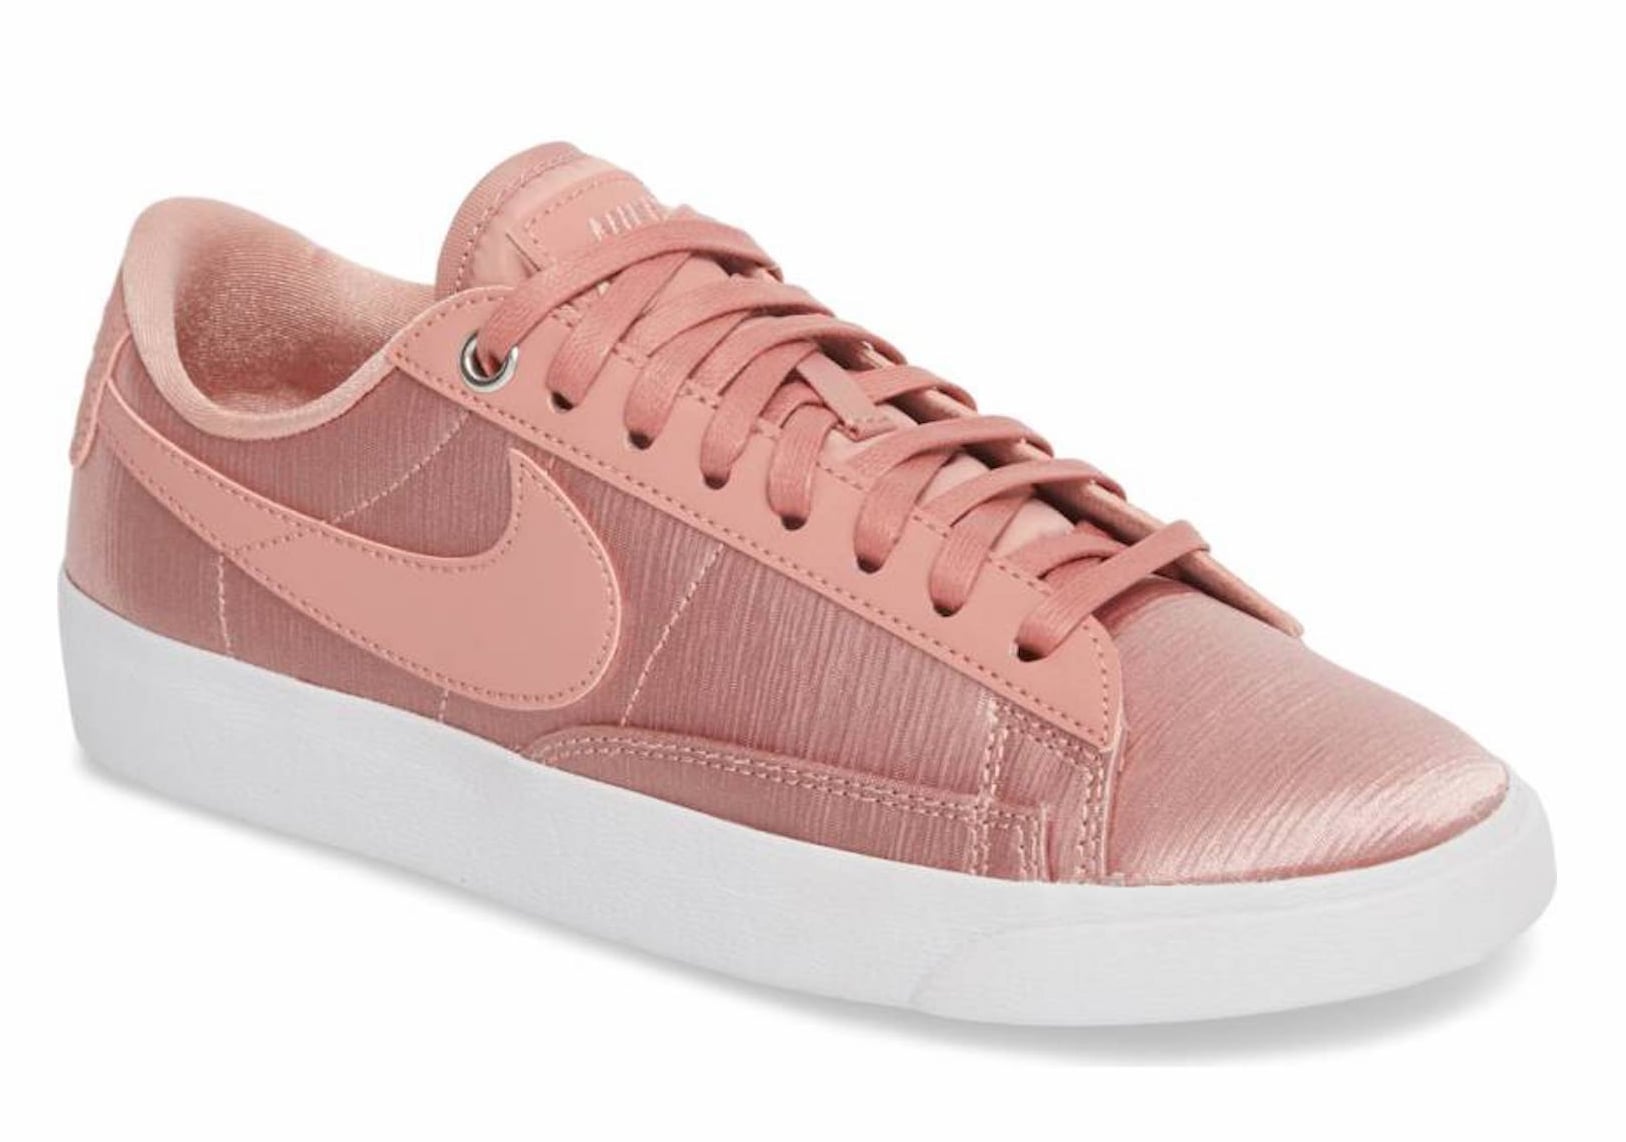 Metallic Pink Nike Sneakers 2018 